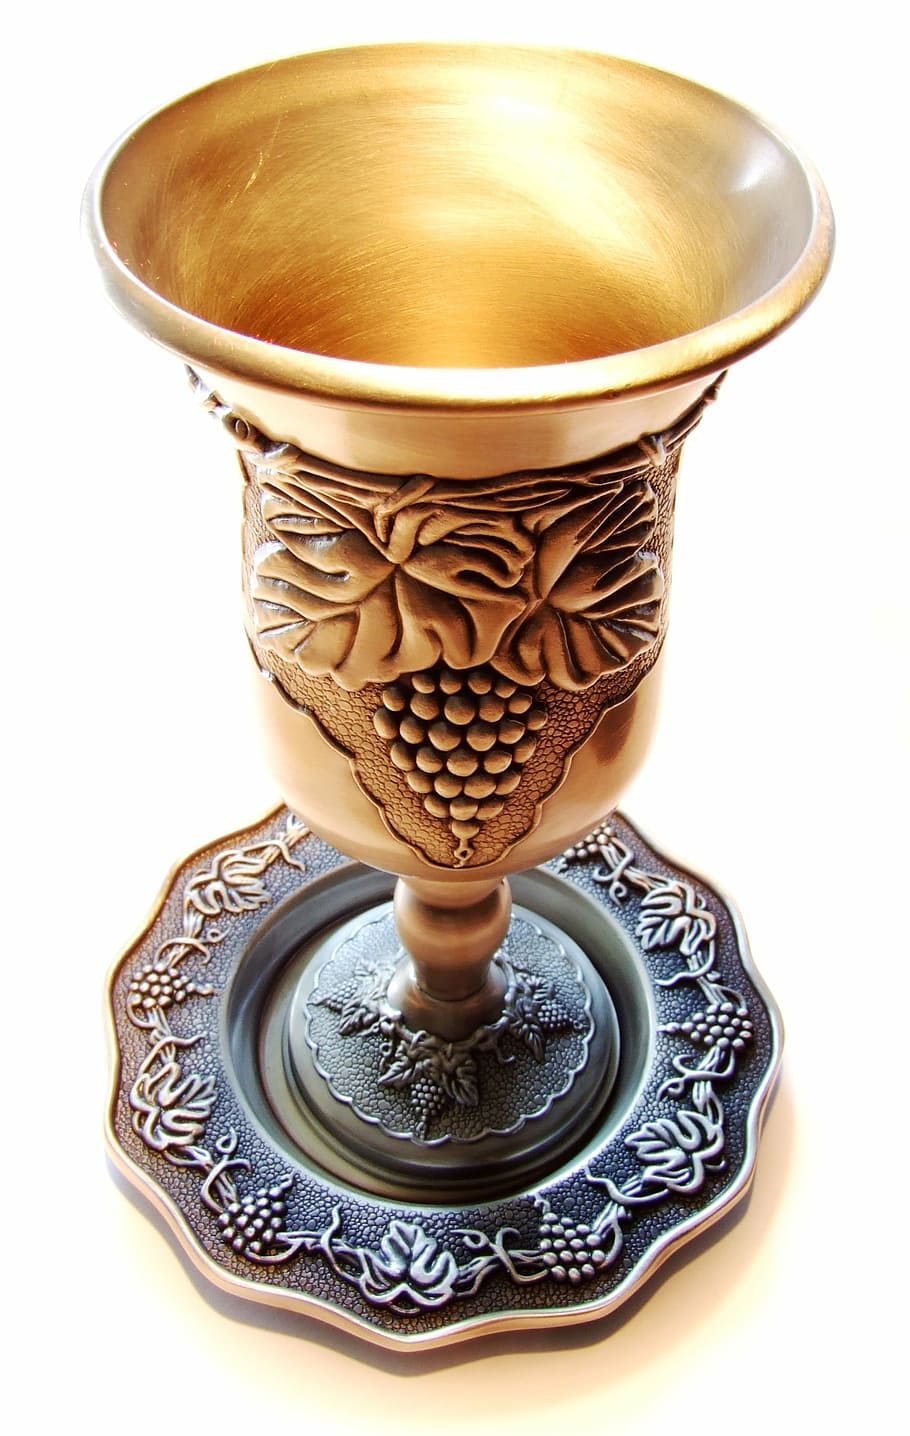 brass goblet, white, background, cup, wine, kiddush, jewish, judaism, synagogue, sacral